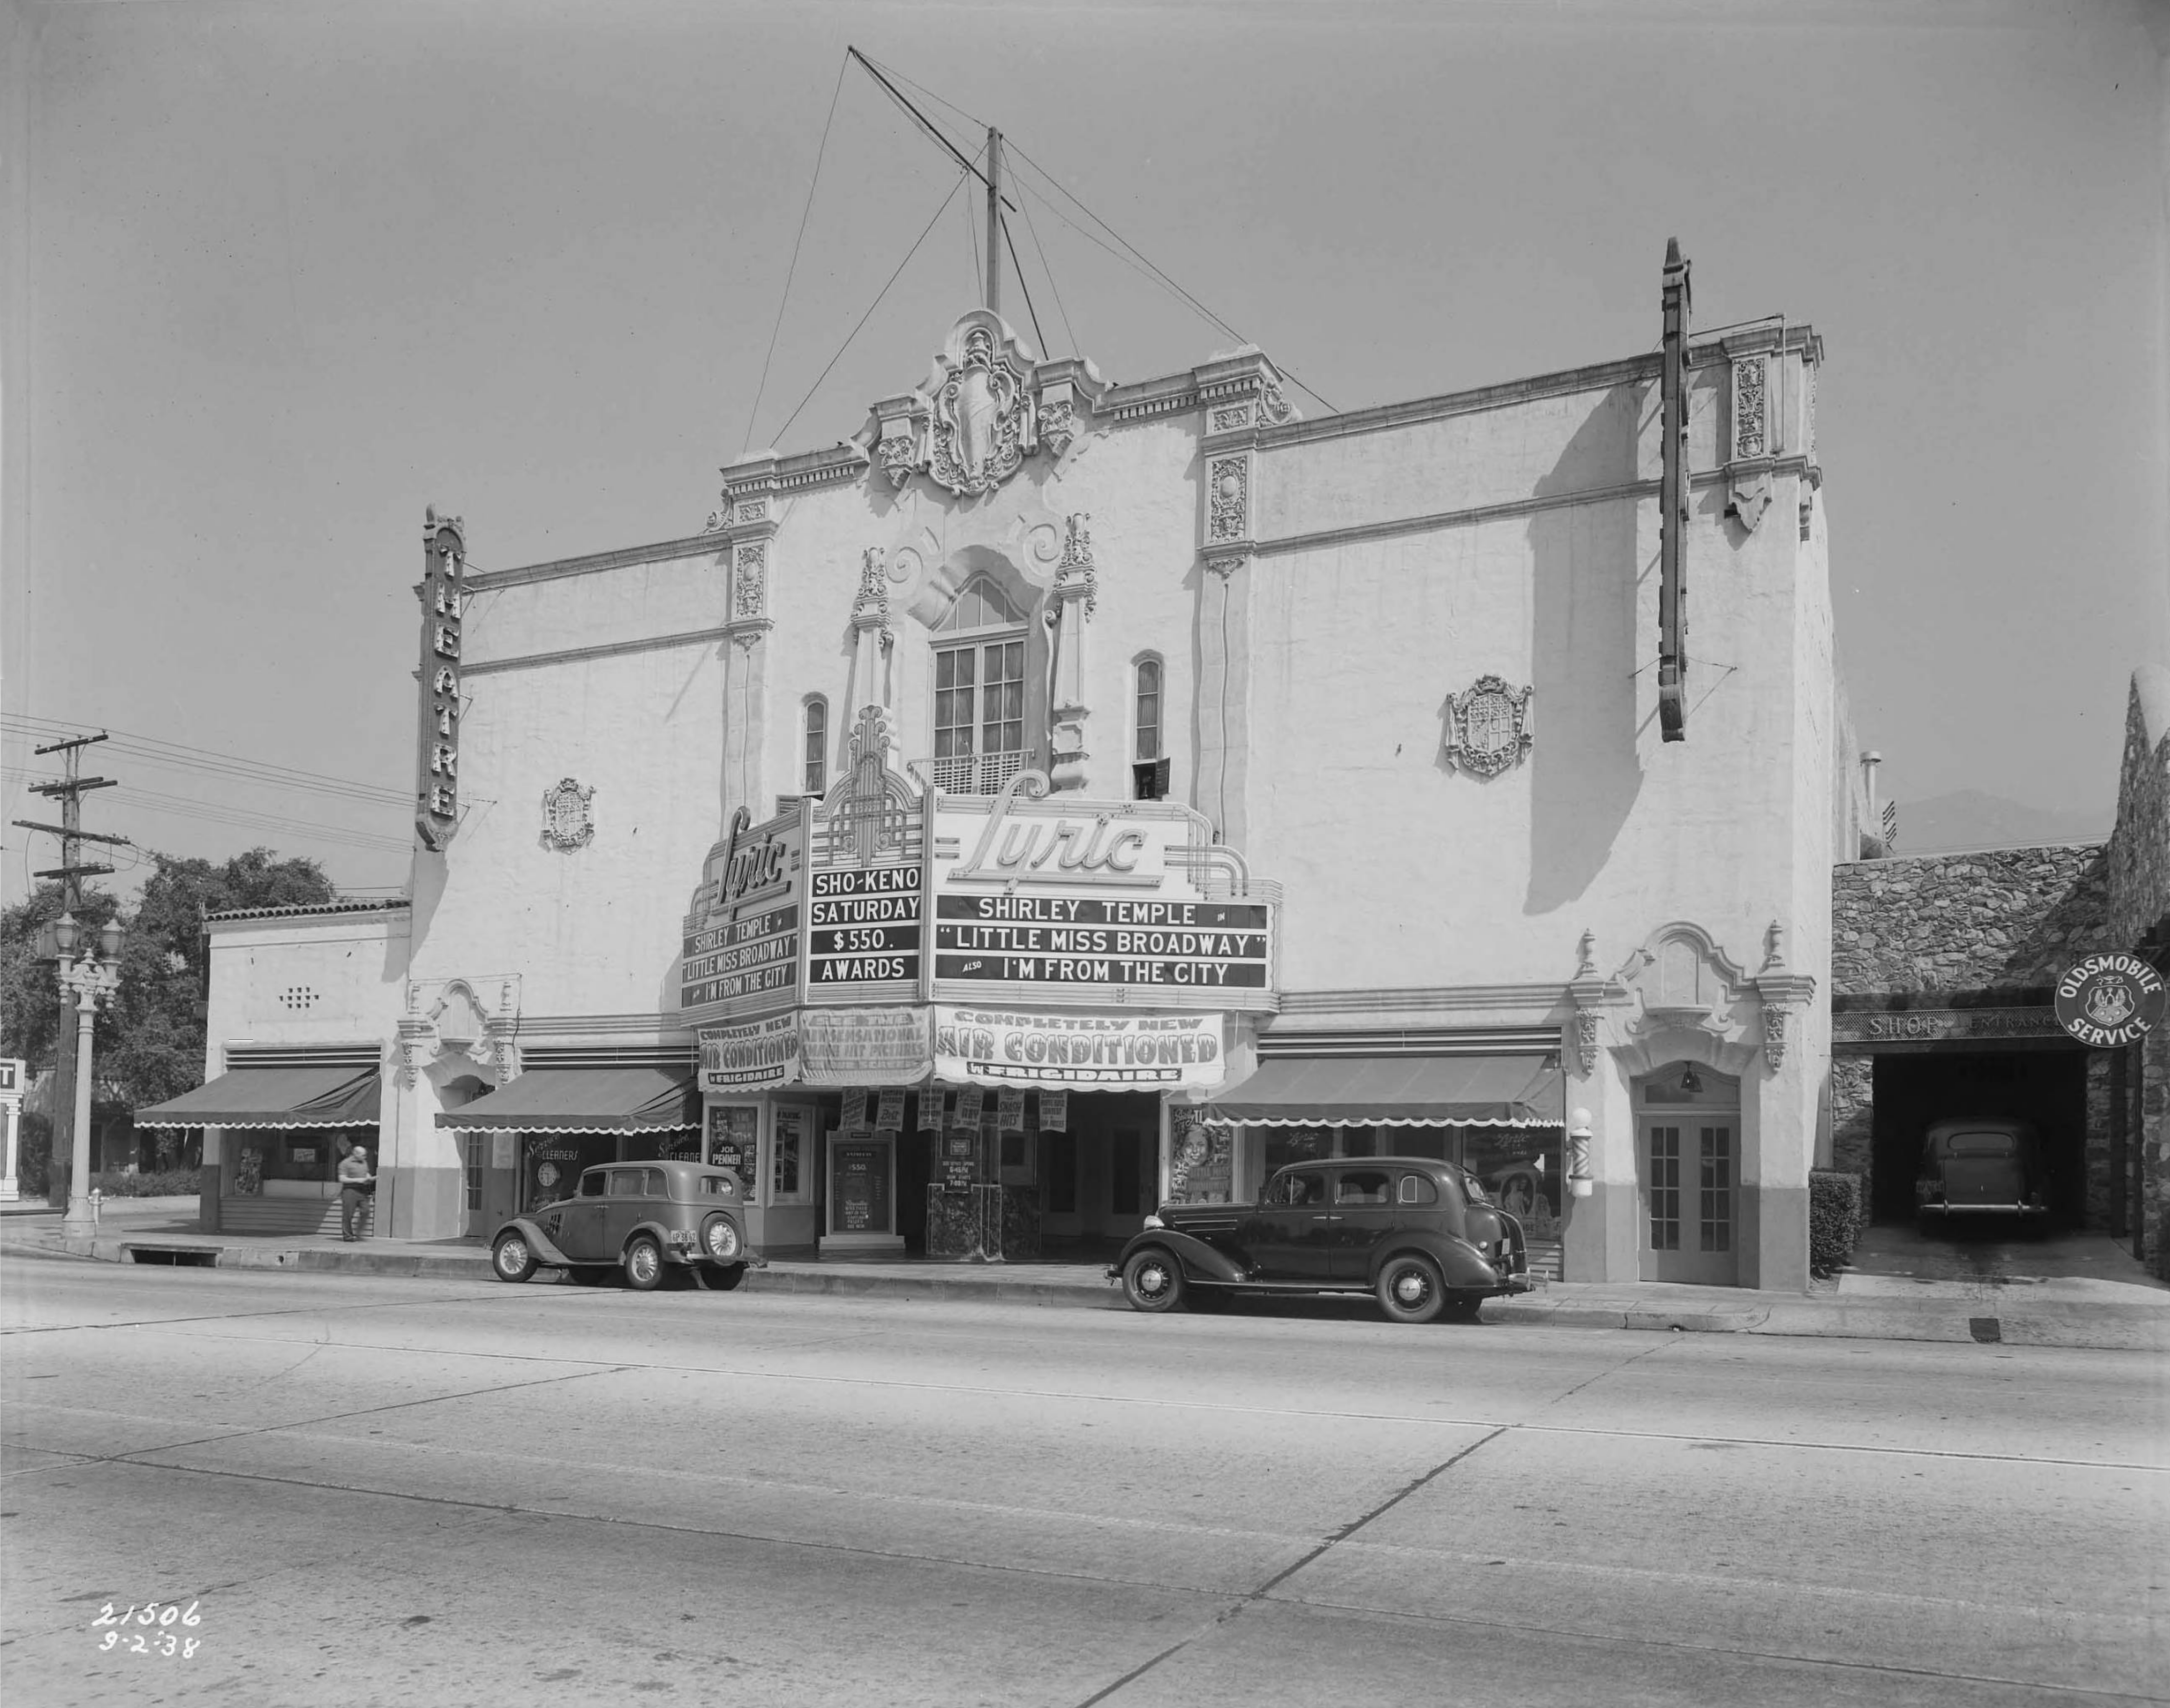 Lyric Theater - Monrovia, California U.S.A. - September 2, 1938